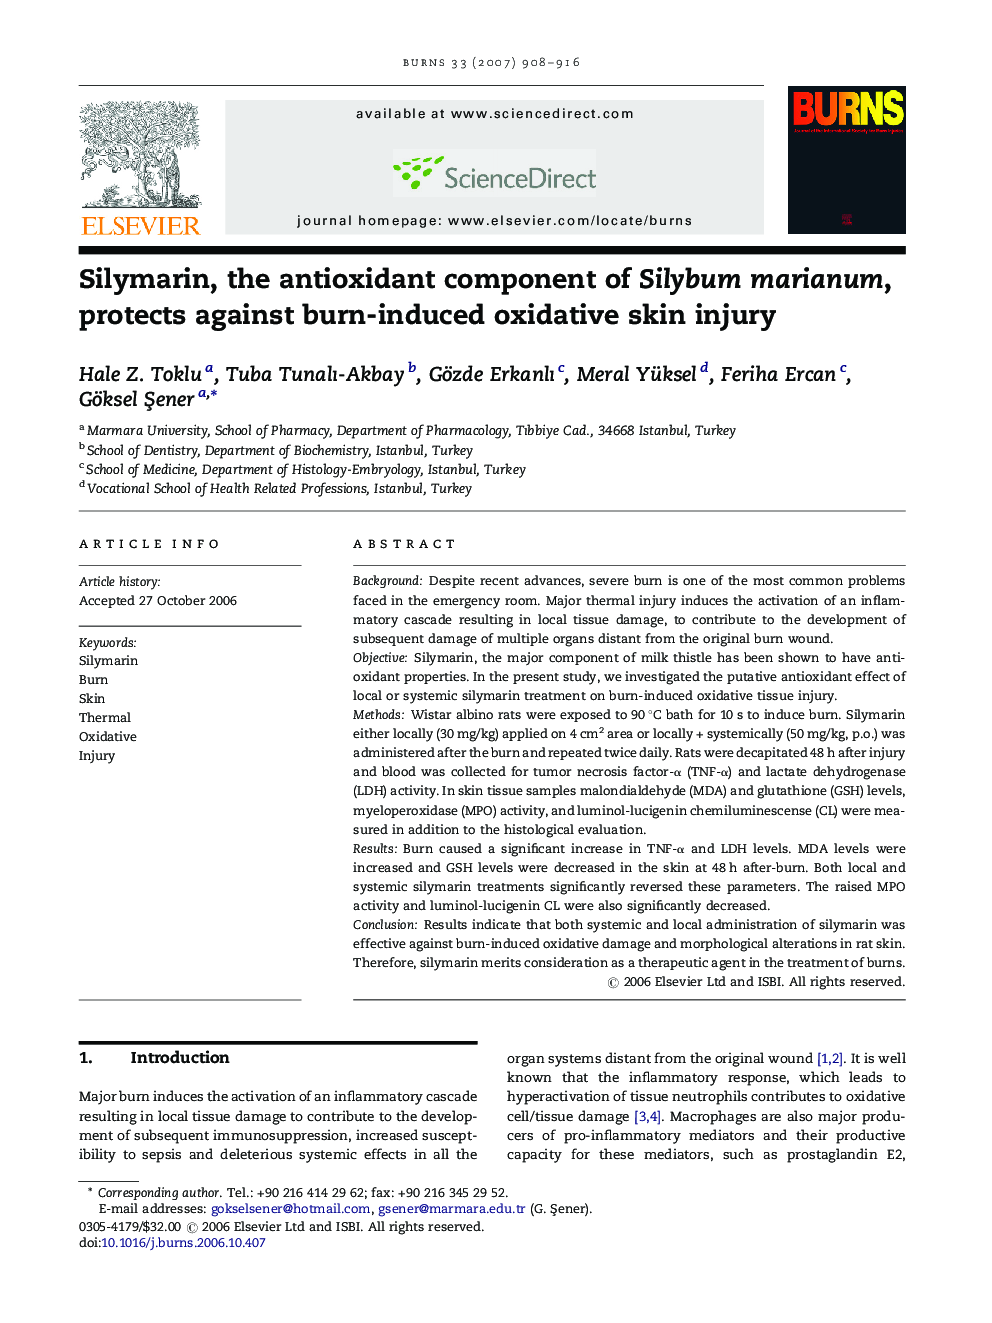 Silymarin, the antioxidant component of Silybum marianum, protects against burn-induced oxidative skin injury